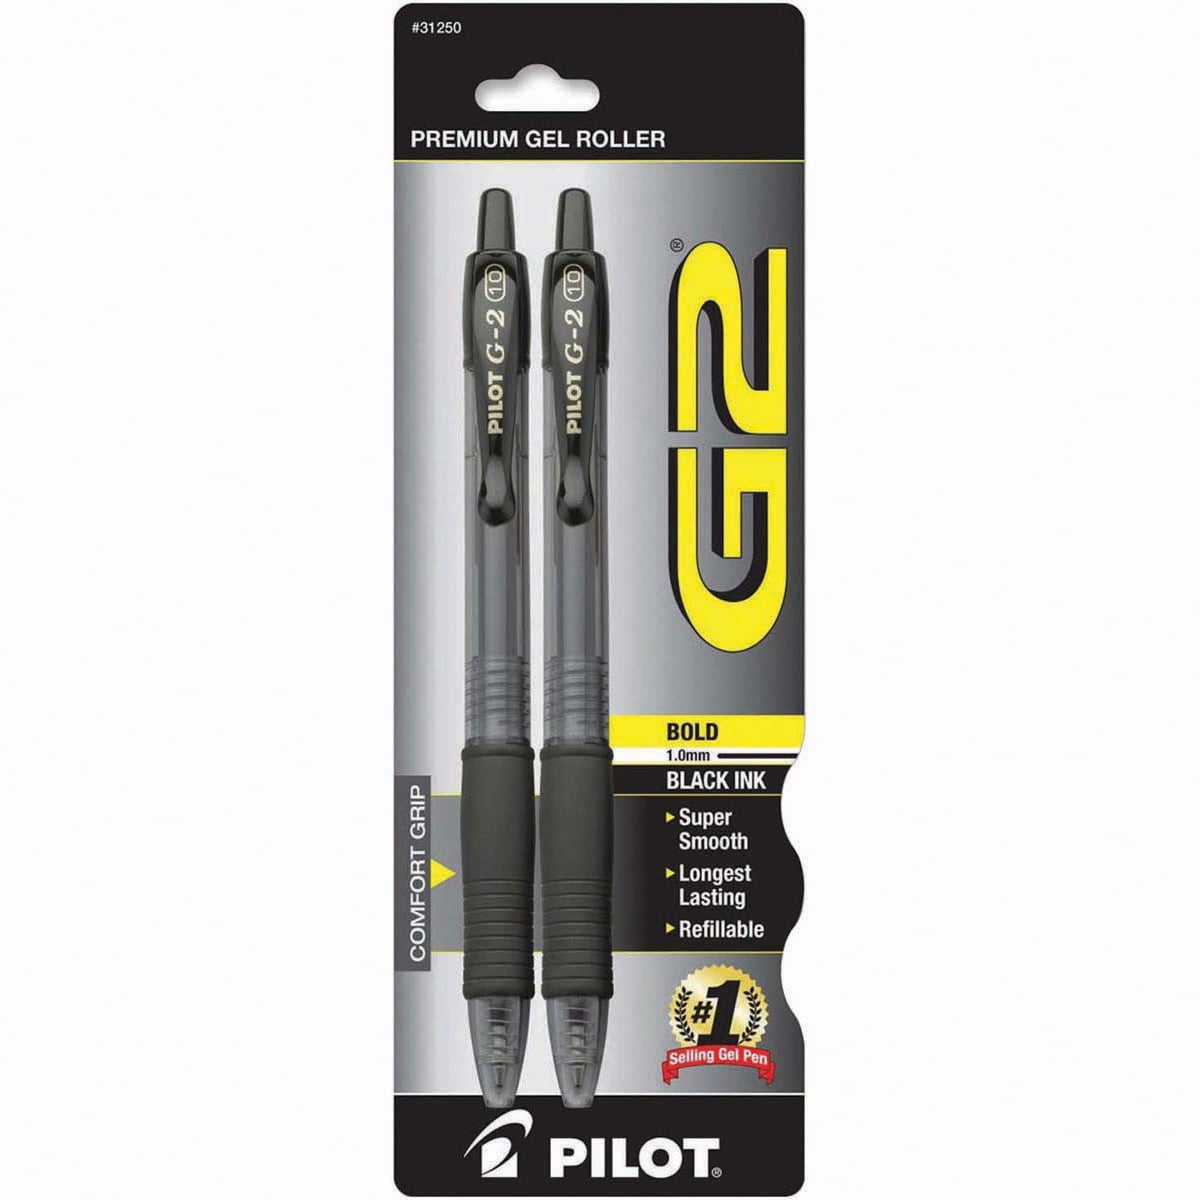 Bold Point Black Ink PILOT G2 Premium Refillable & Retractable Rolling Ball Gel Pens 